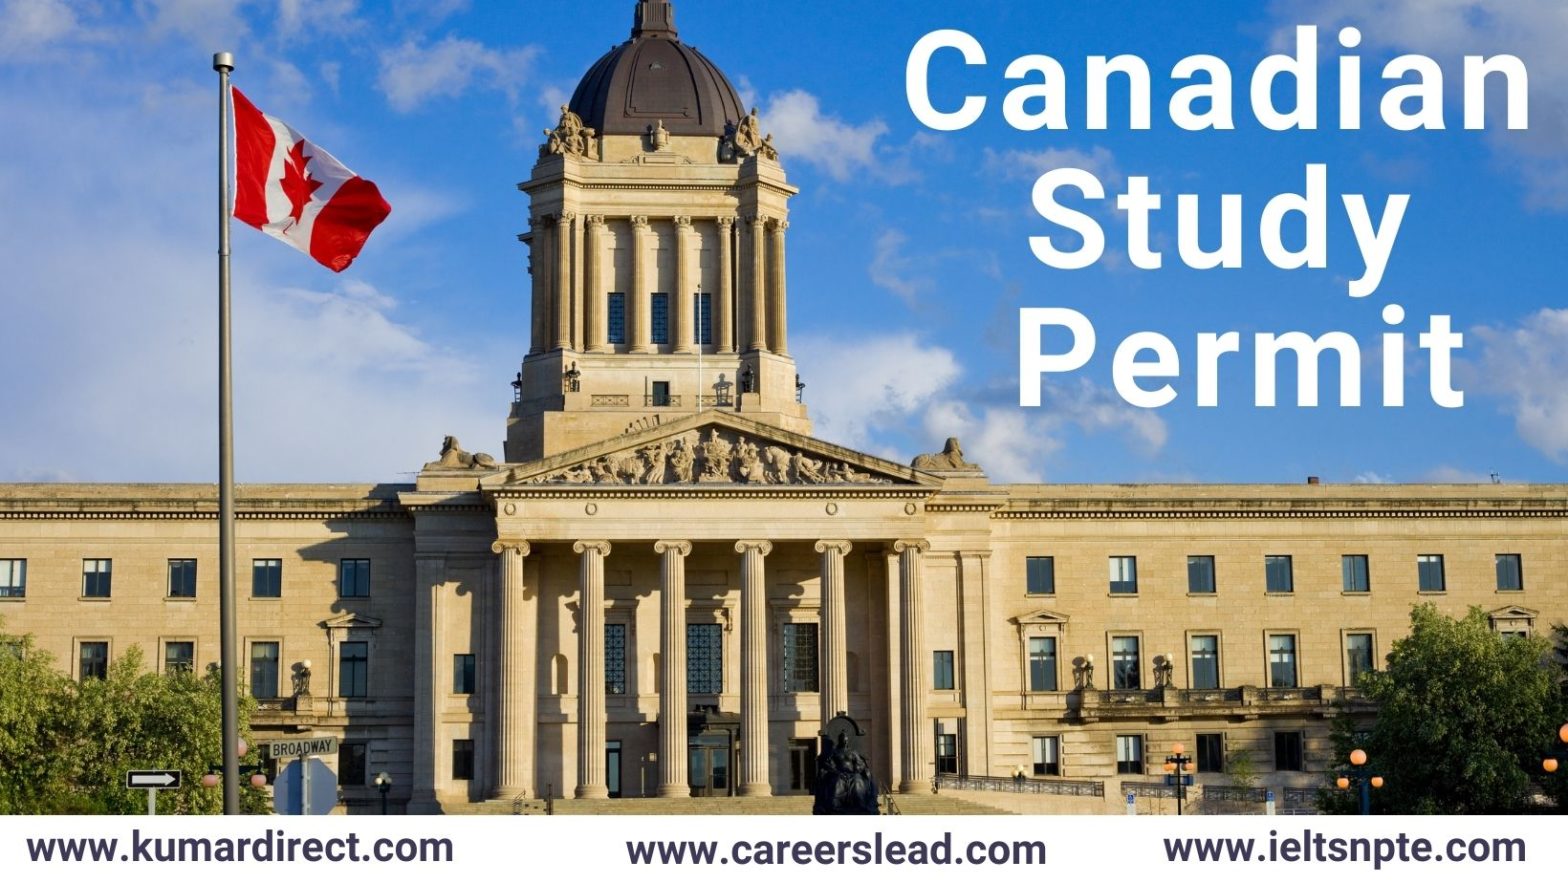 Canadian Study Permit